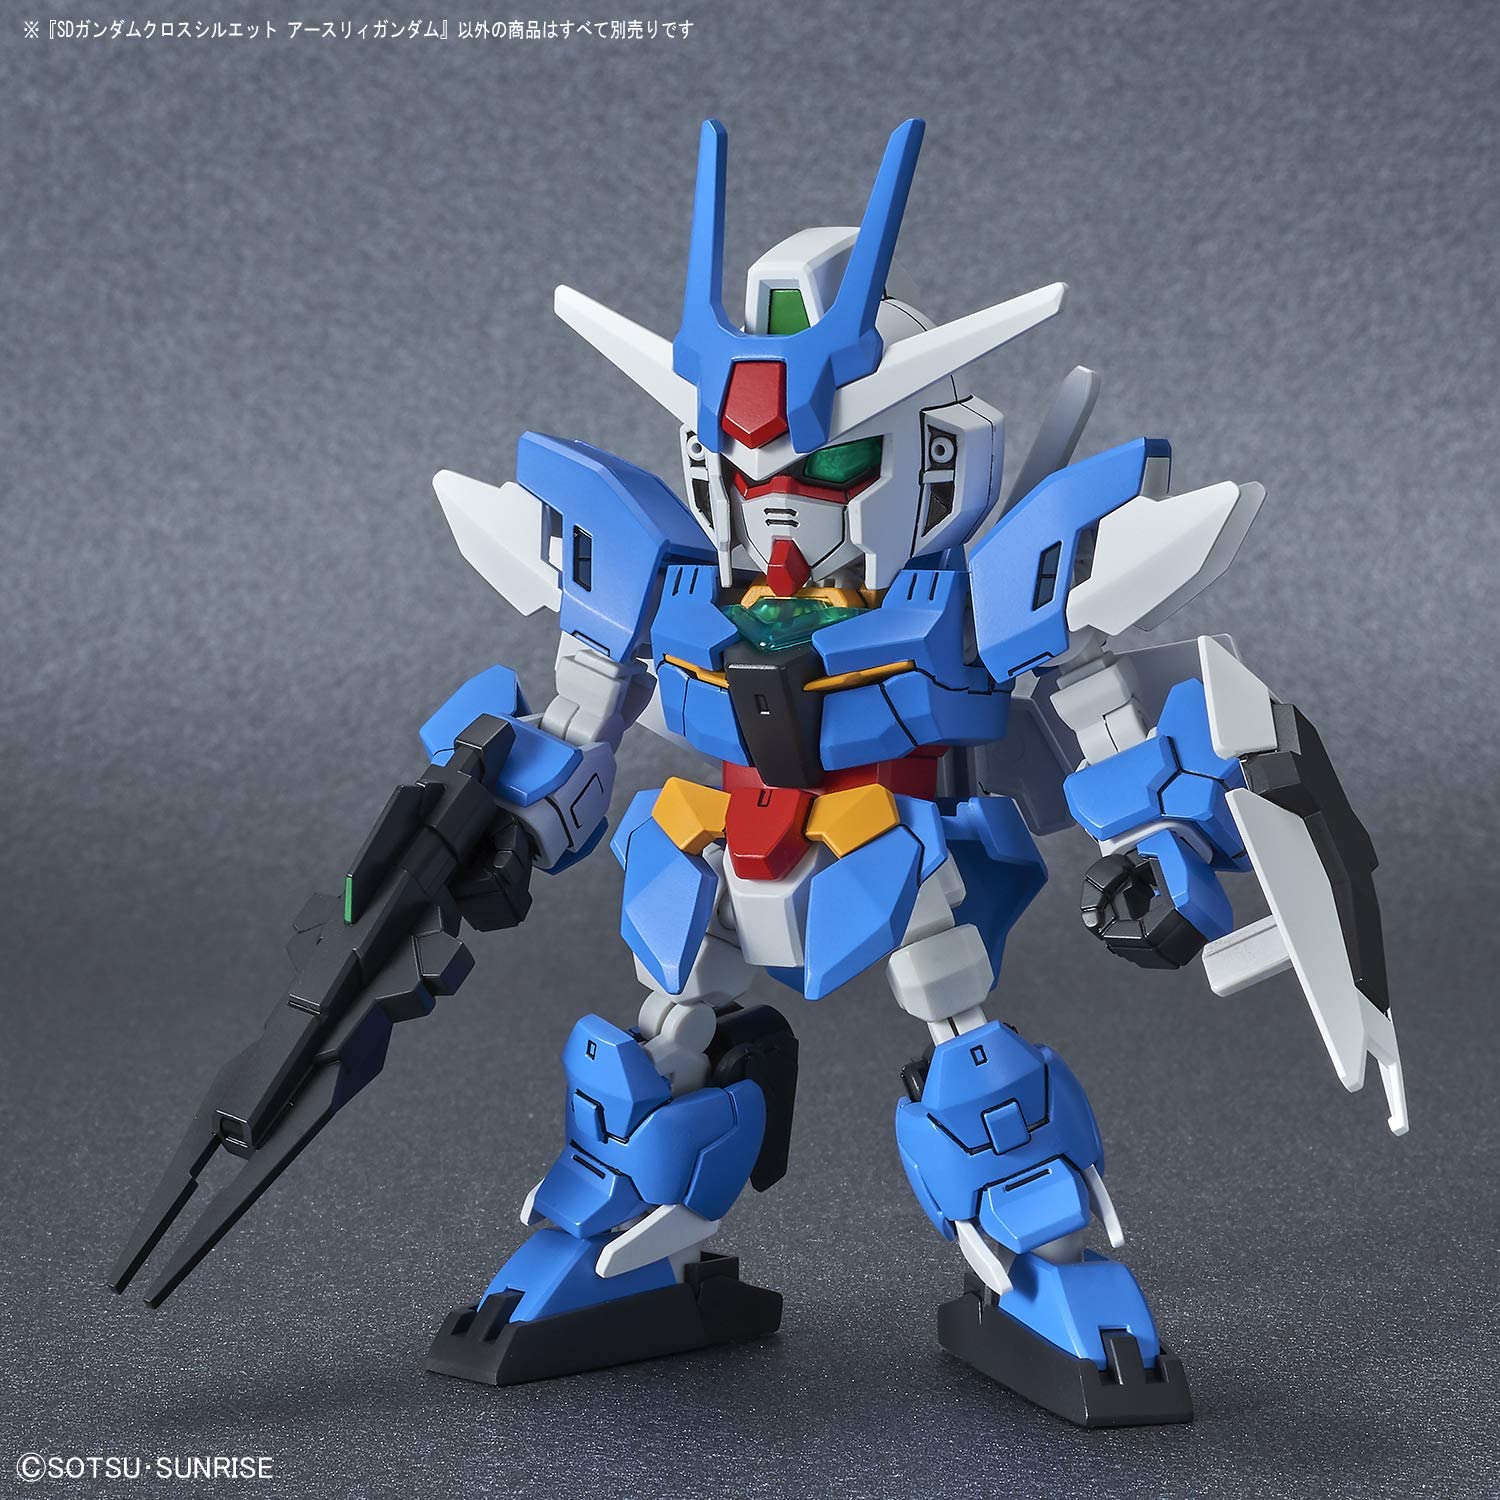 Cross Silhouette - PFF-X7/E3 Earthree Gundam